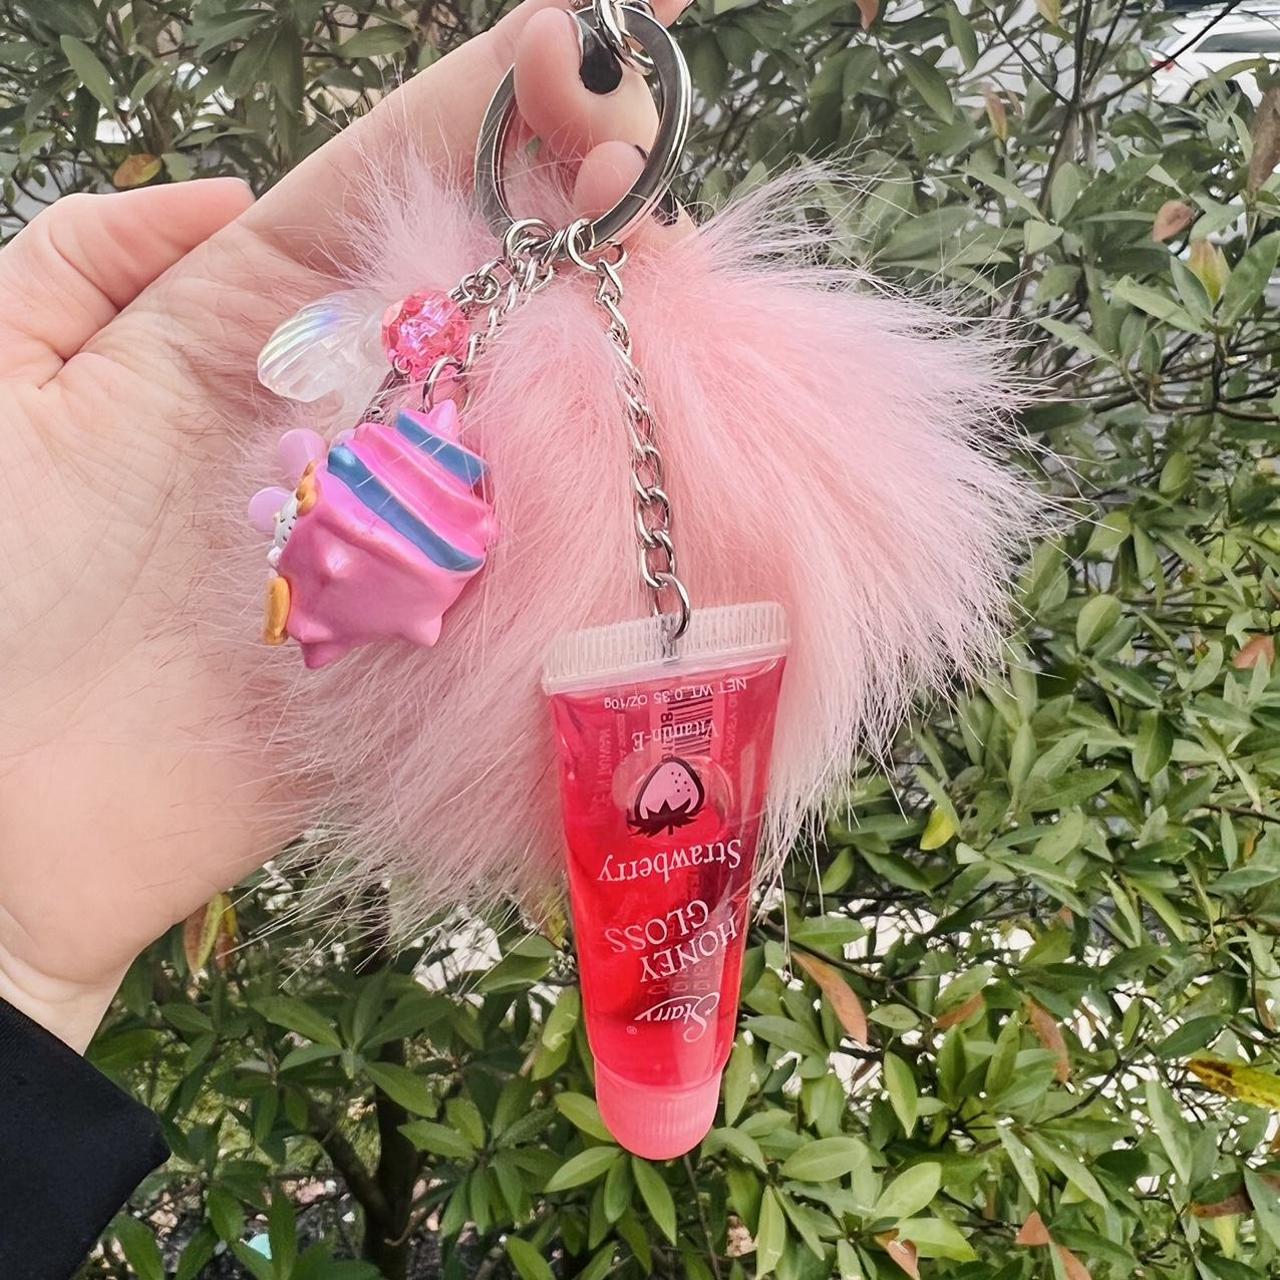 puff ball keychain with lip gloss